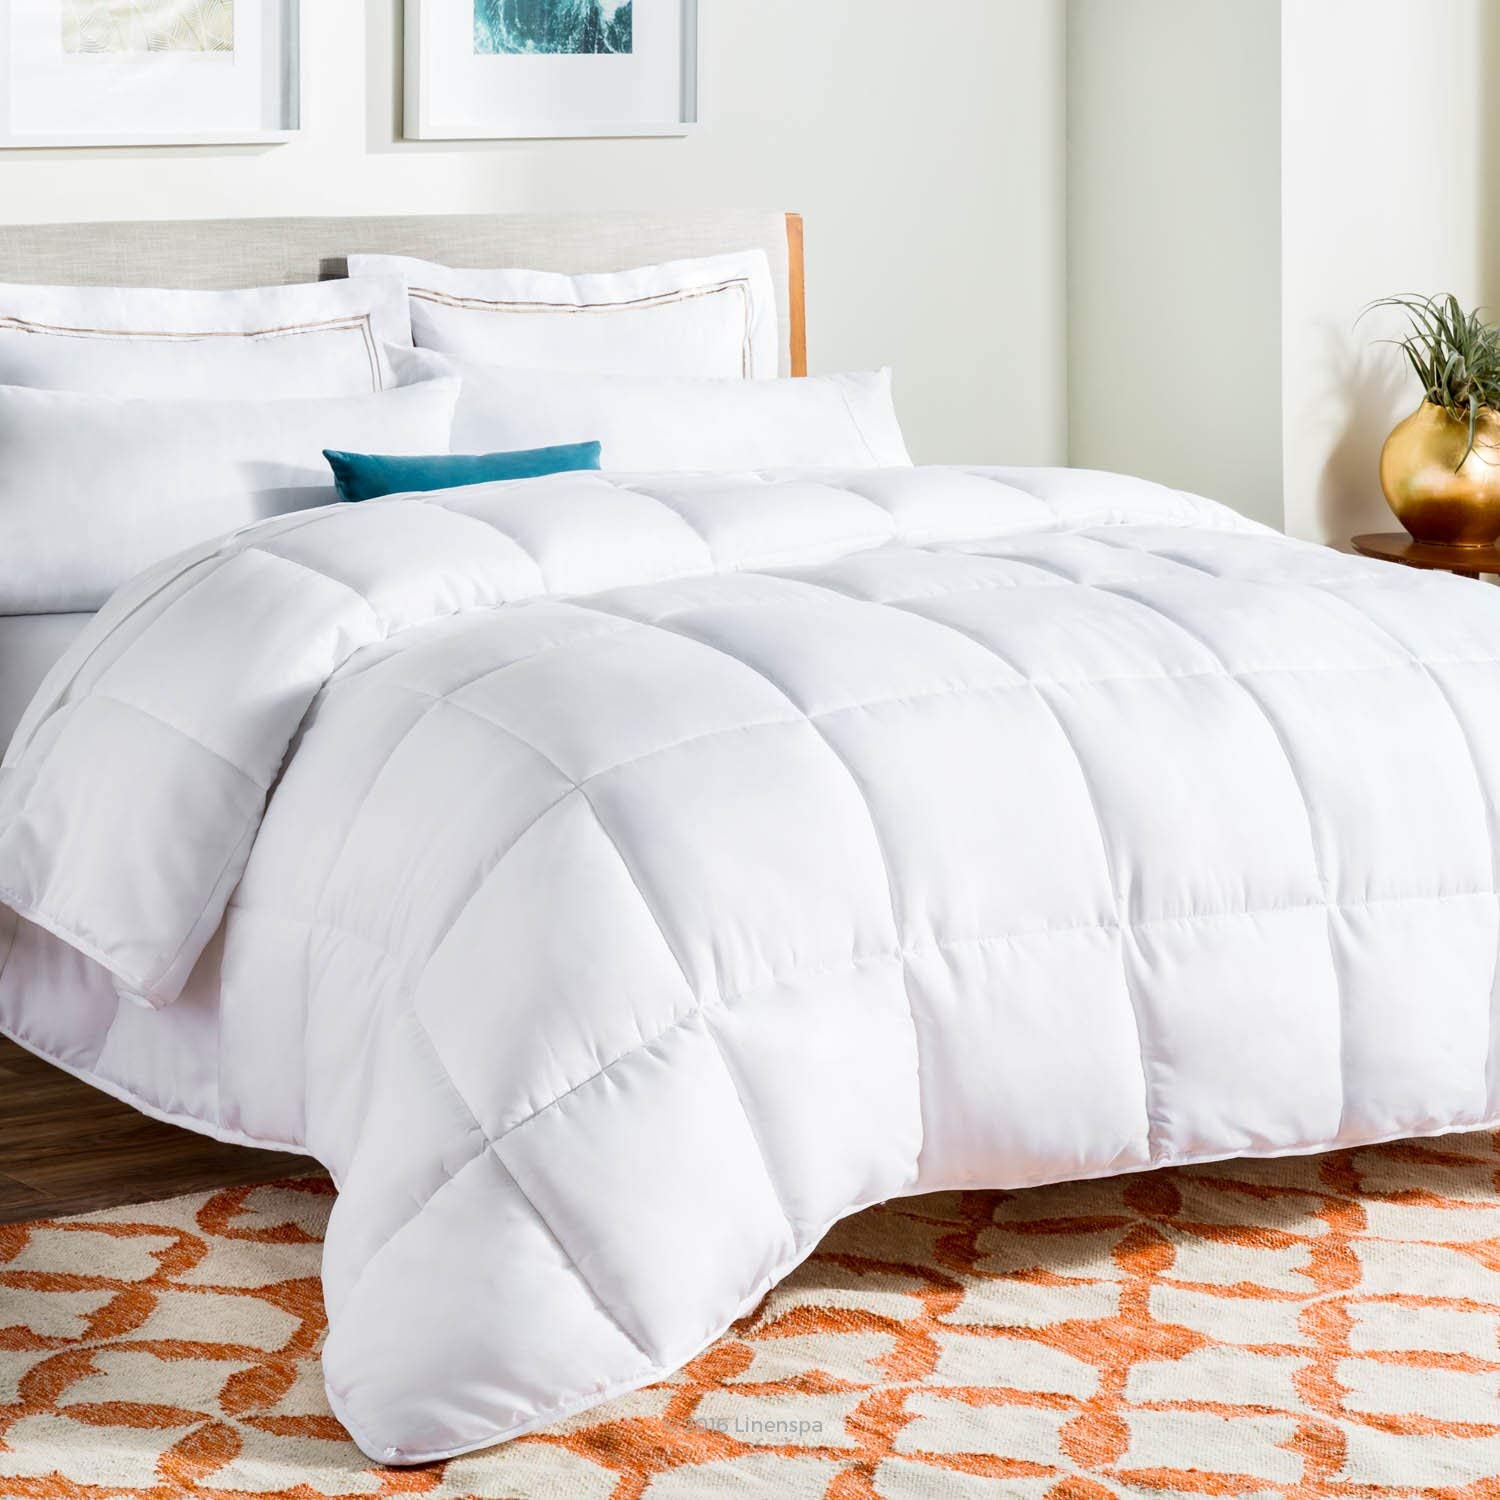 Linenspa Quilted All-Season Comforter Duvet Insert